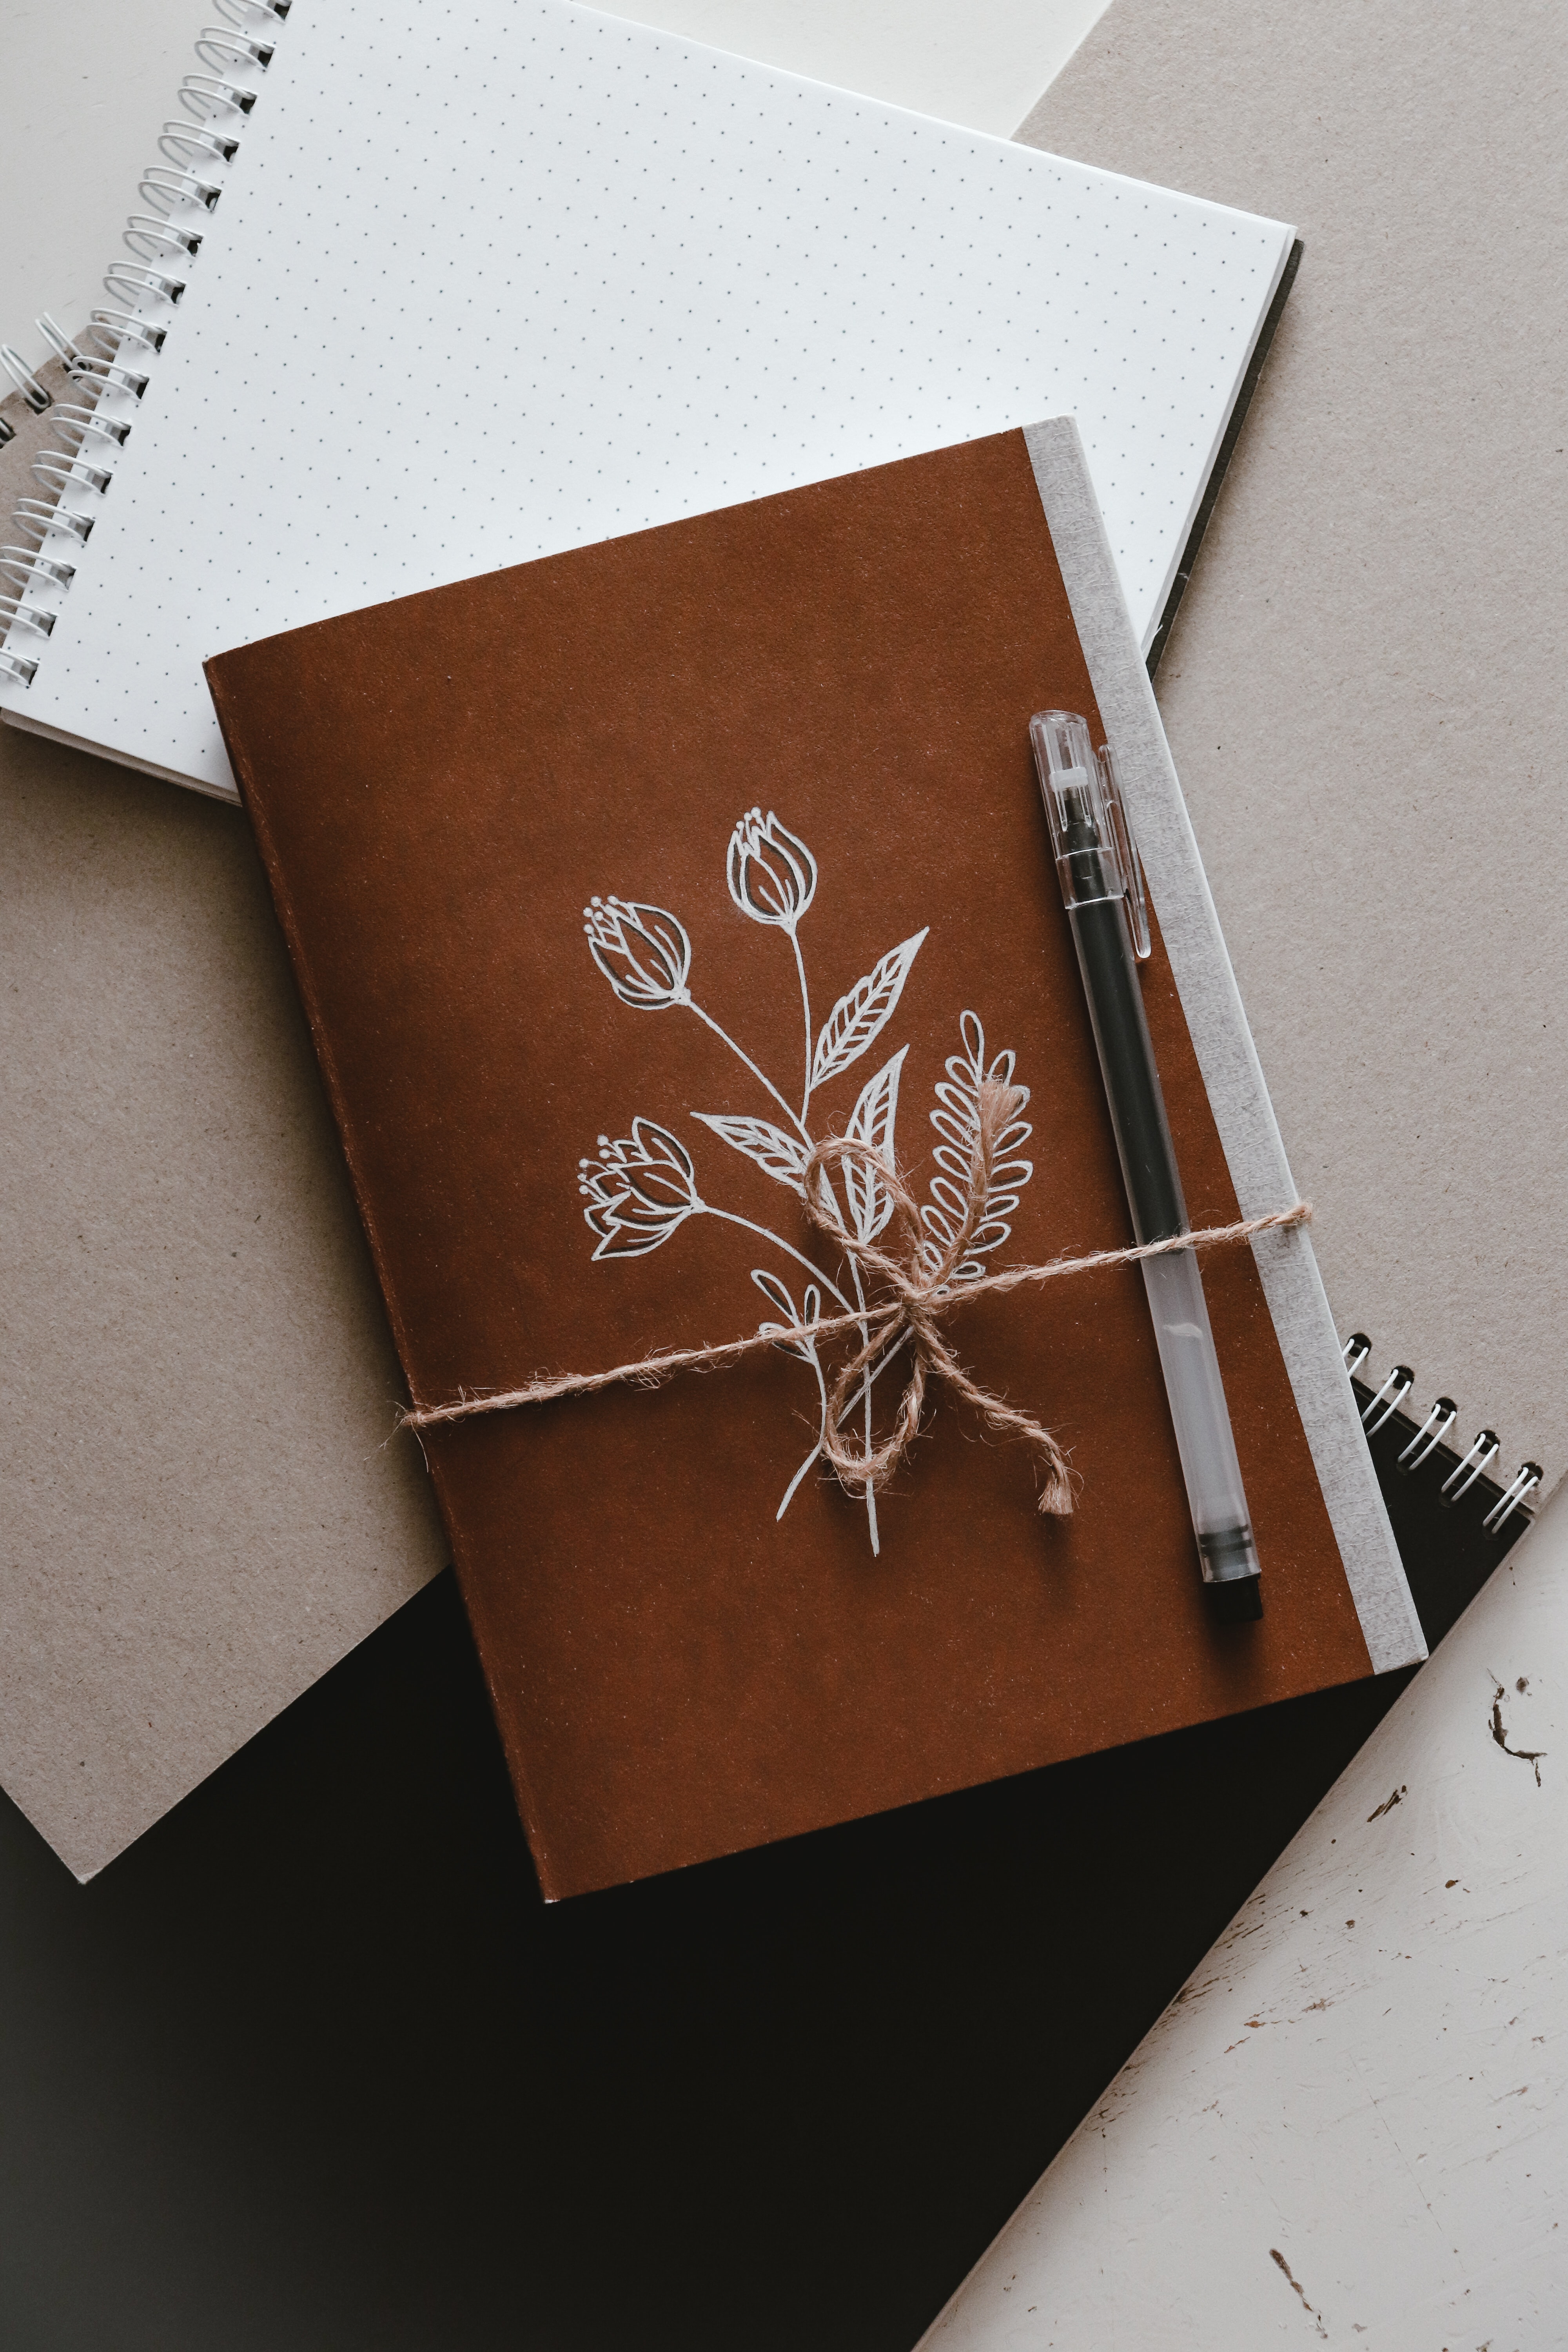 pen, paper, notepad, flowers, miscellanea, miscellaneous, notebook